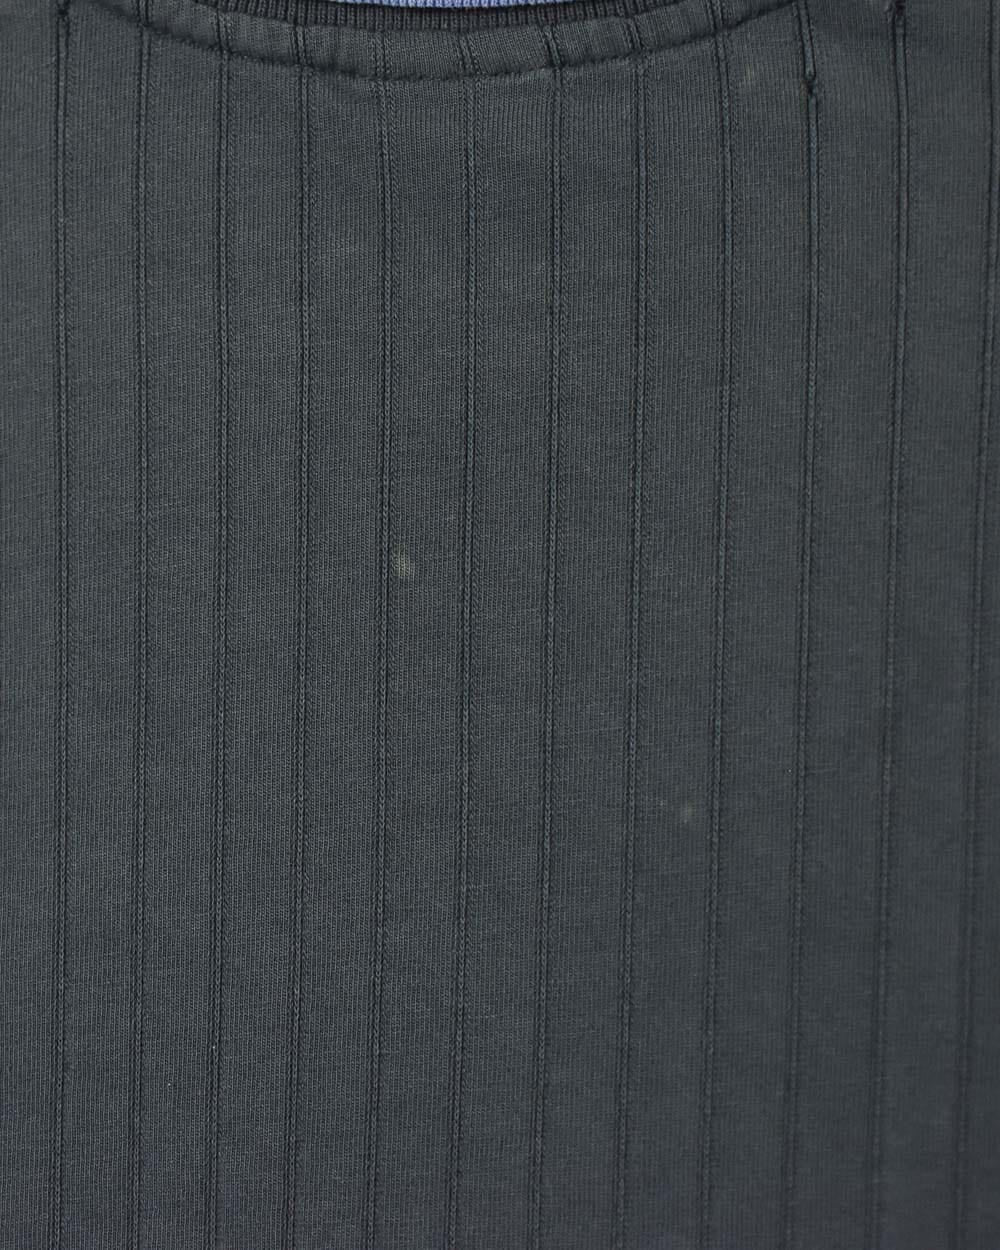 Navy Nike Challenge Court Striped Polo Shirt - Medium